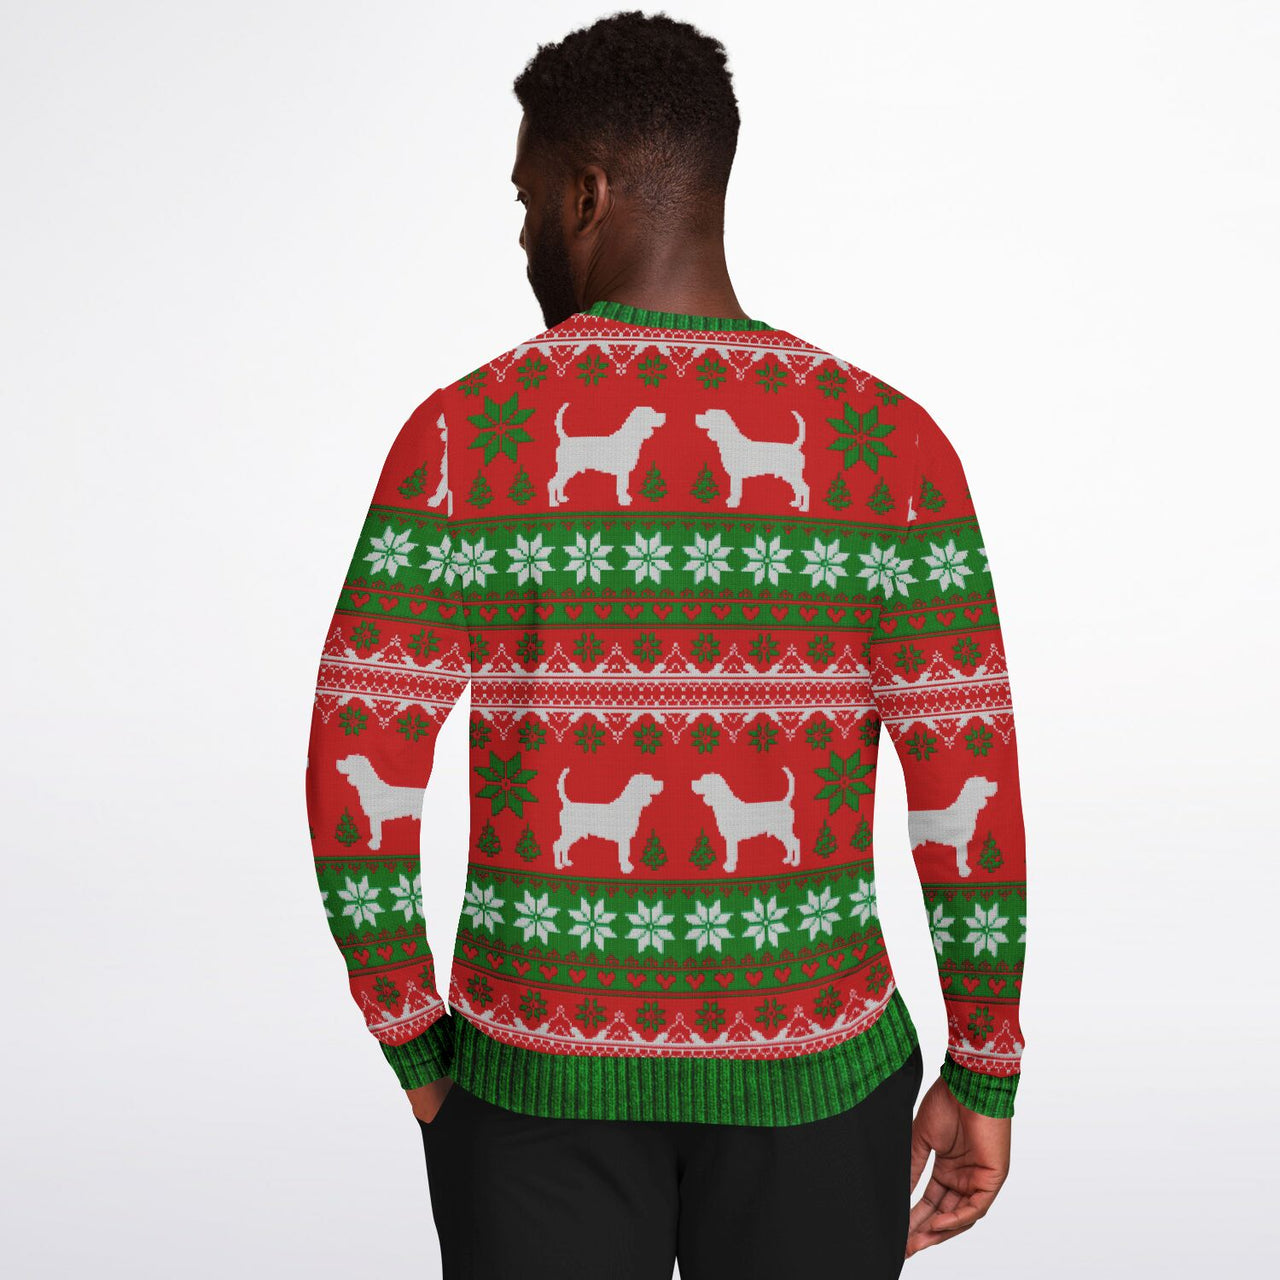 Beagle Bells Ugly Christmas Athletic Sweatshirt - Adult AOP